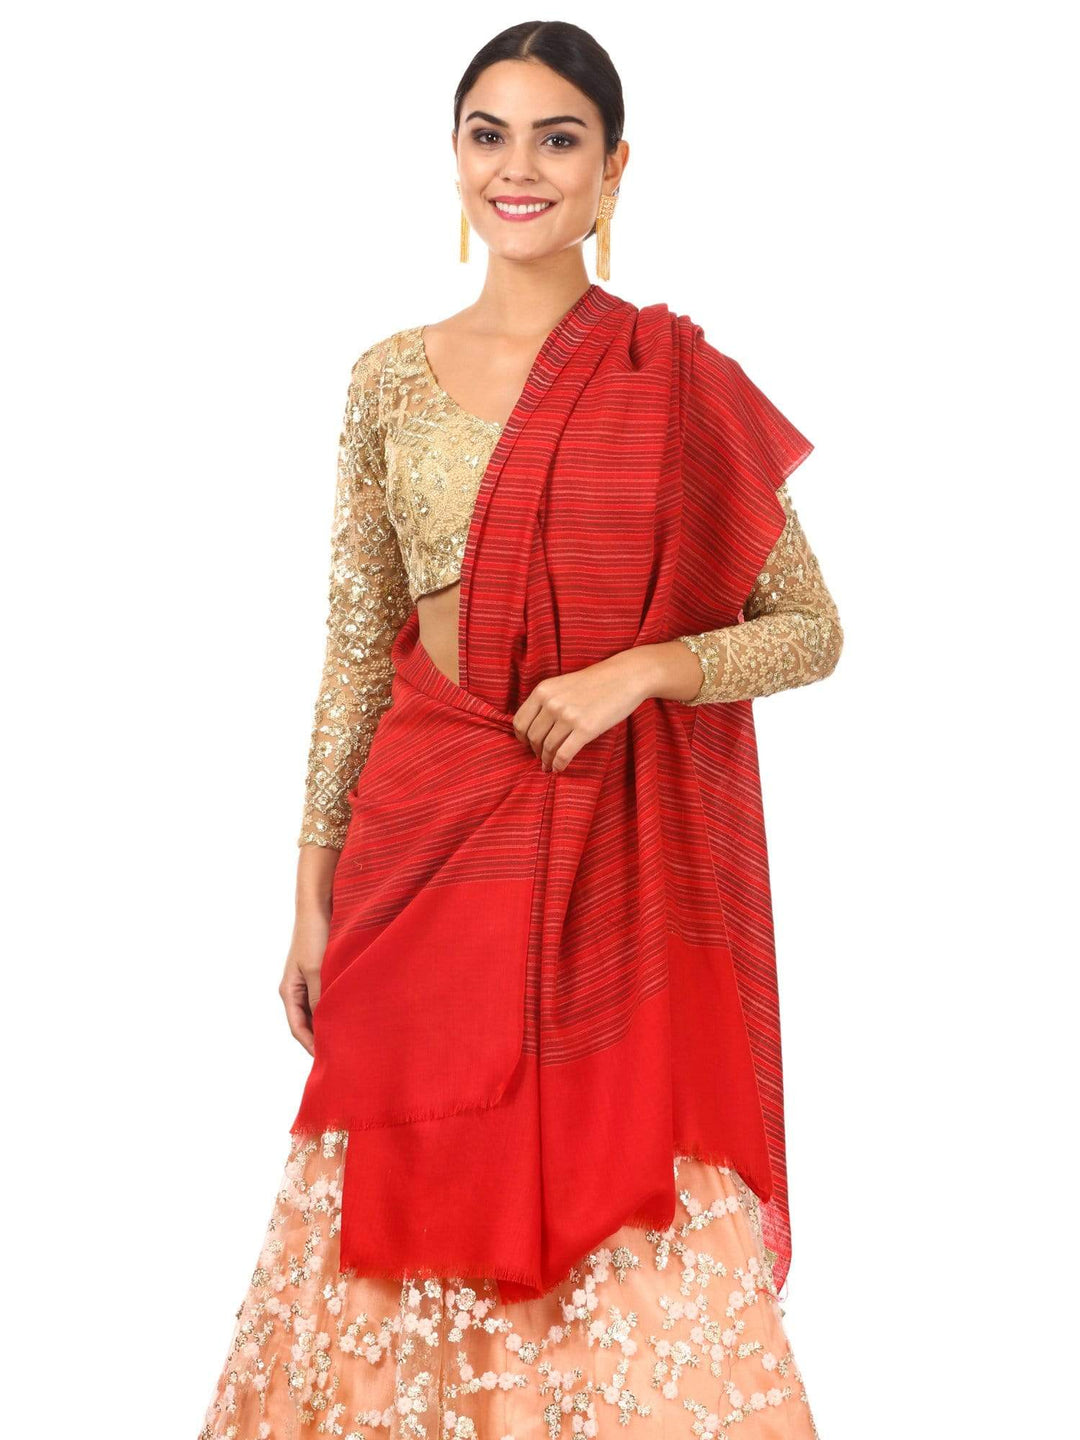 Pashtush Women'S Shawl, Fine Wool, Striped Design, Faux Pashmina, Soft And Warm, Deep Red